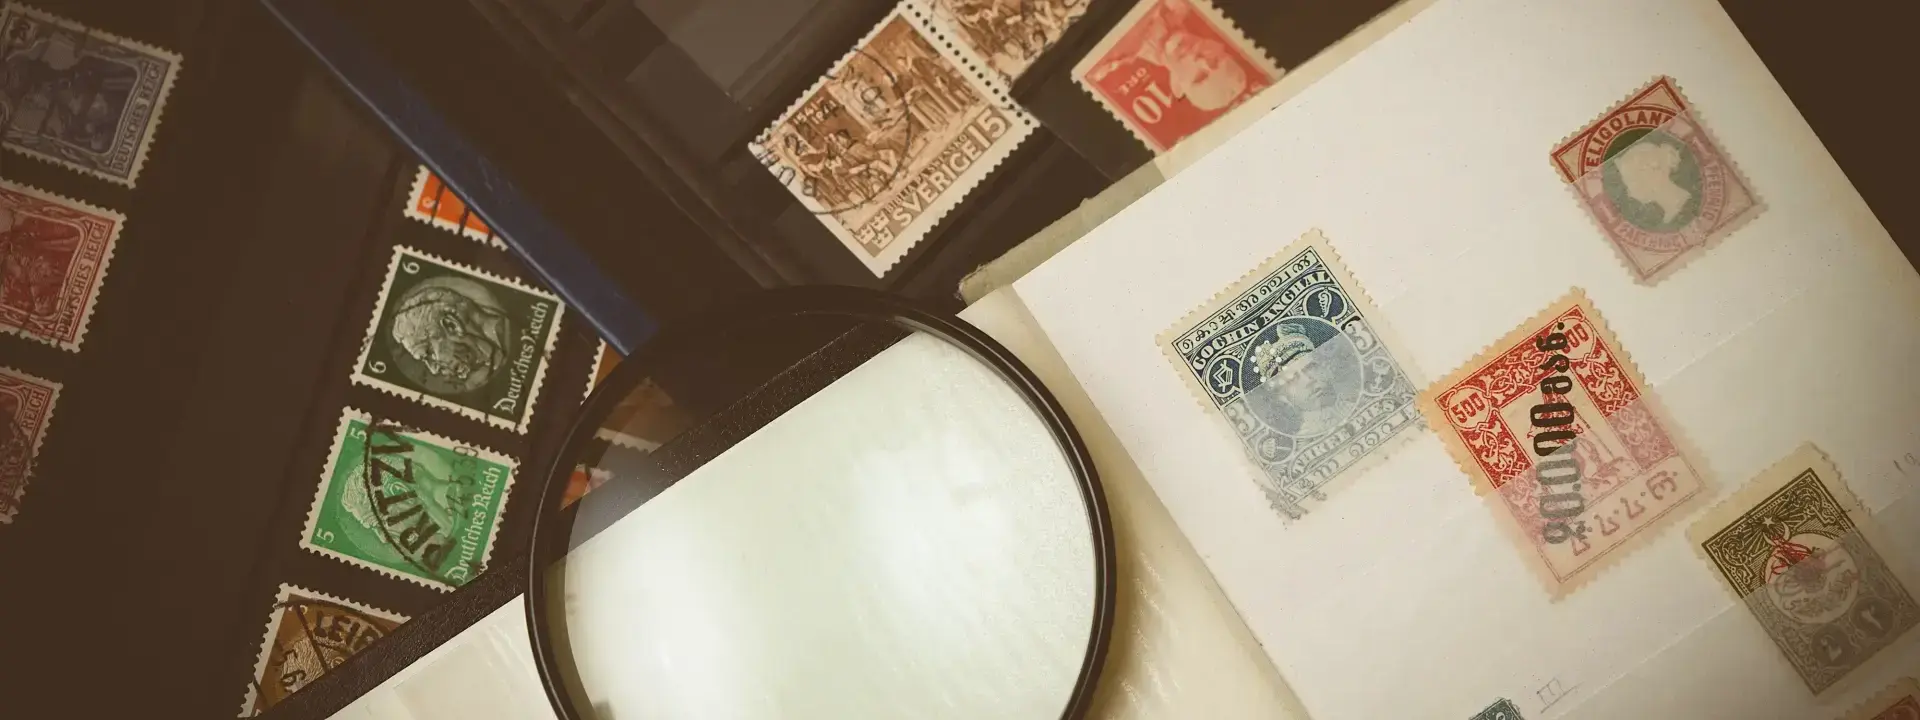 Stamp Creator Staff in Denmark